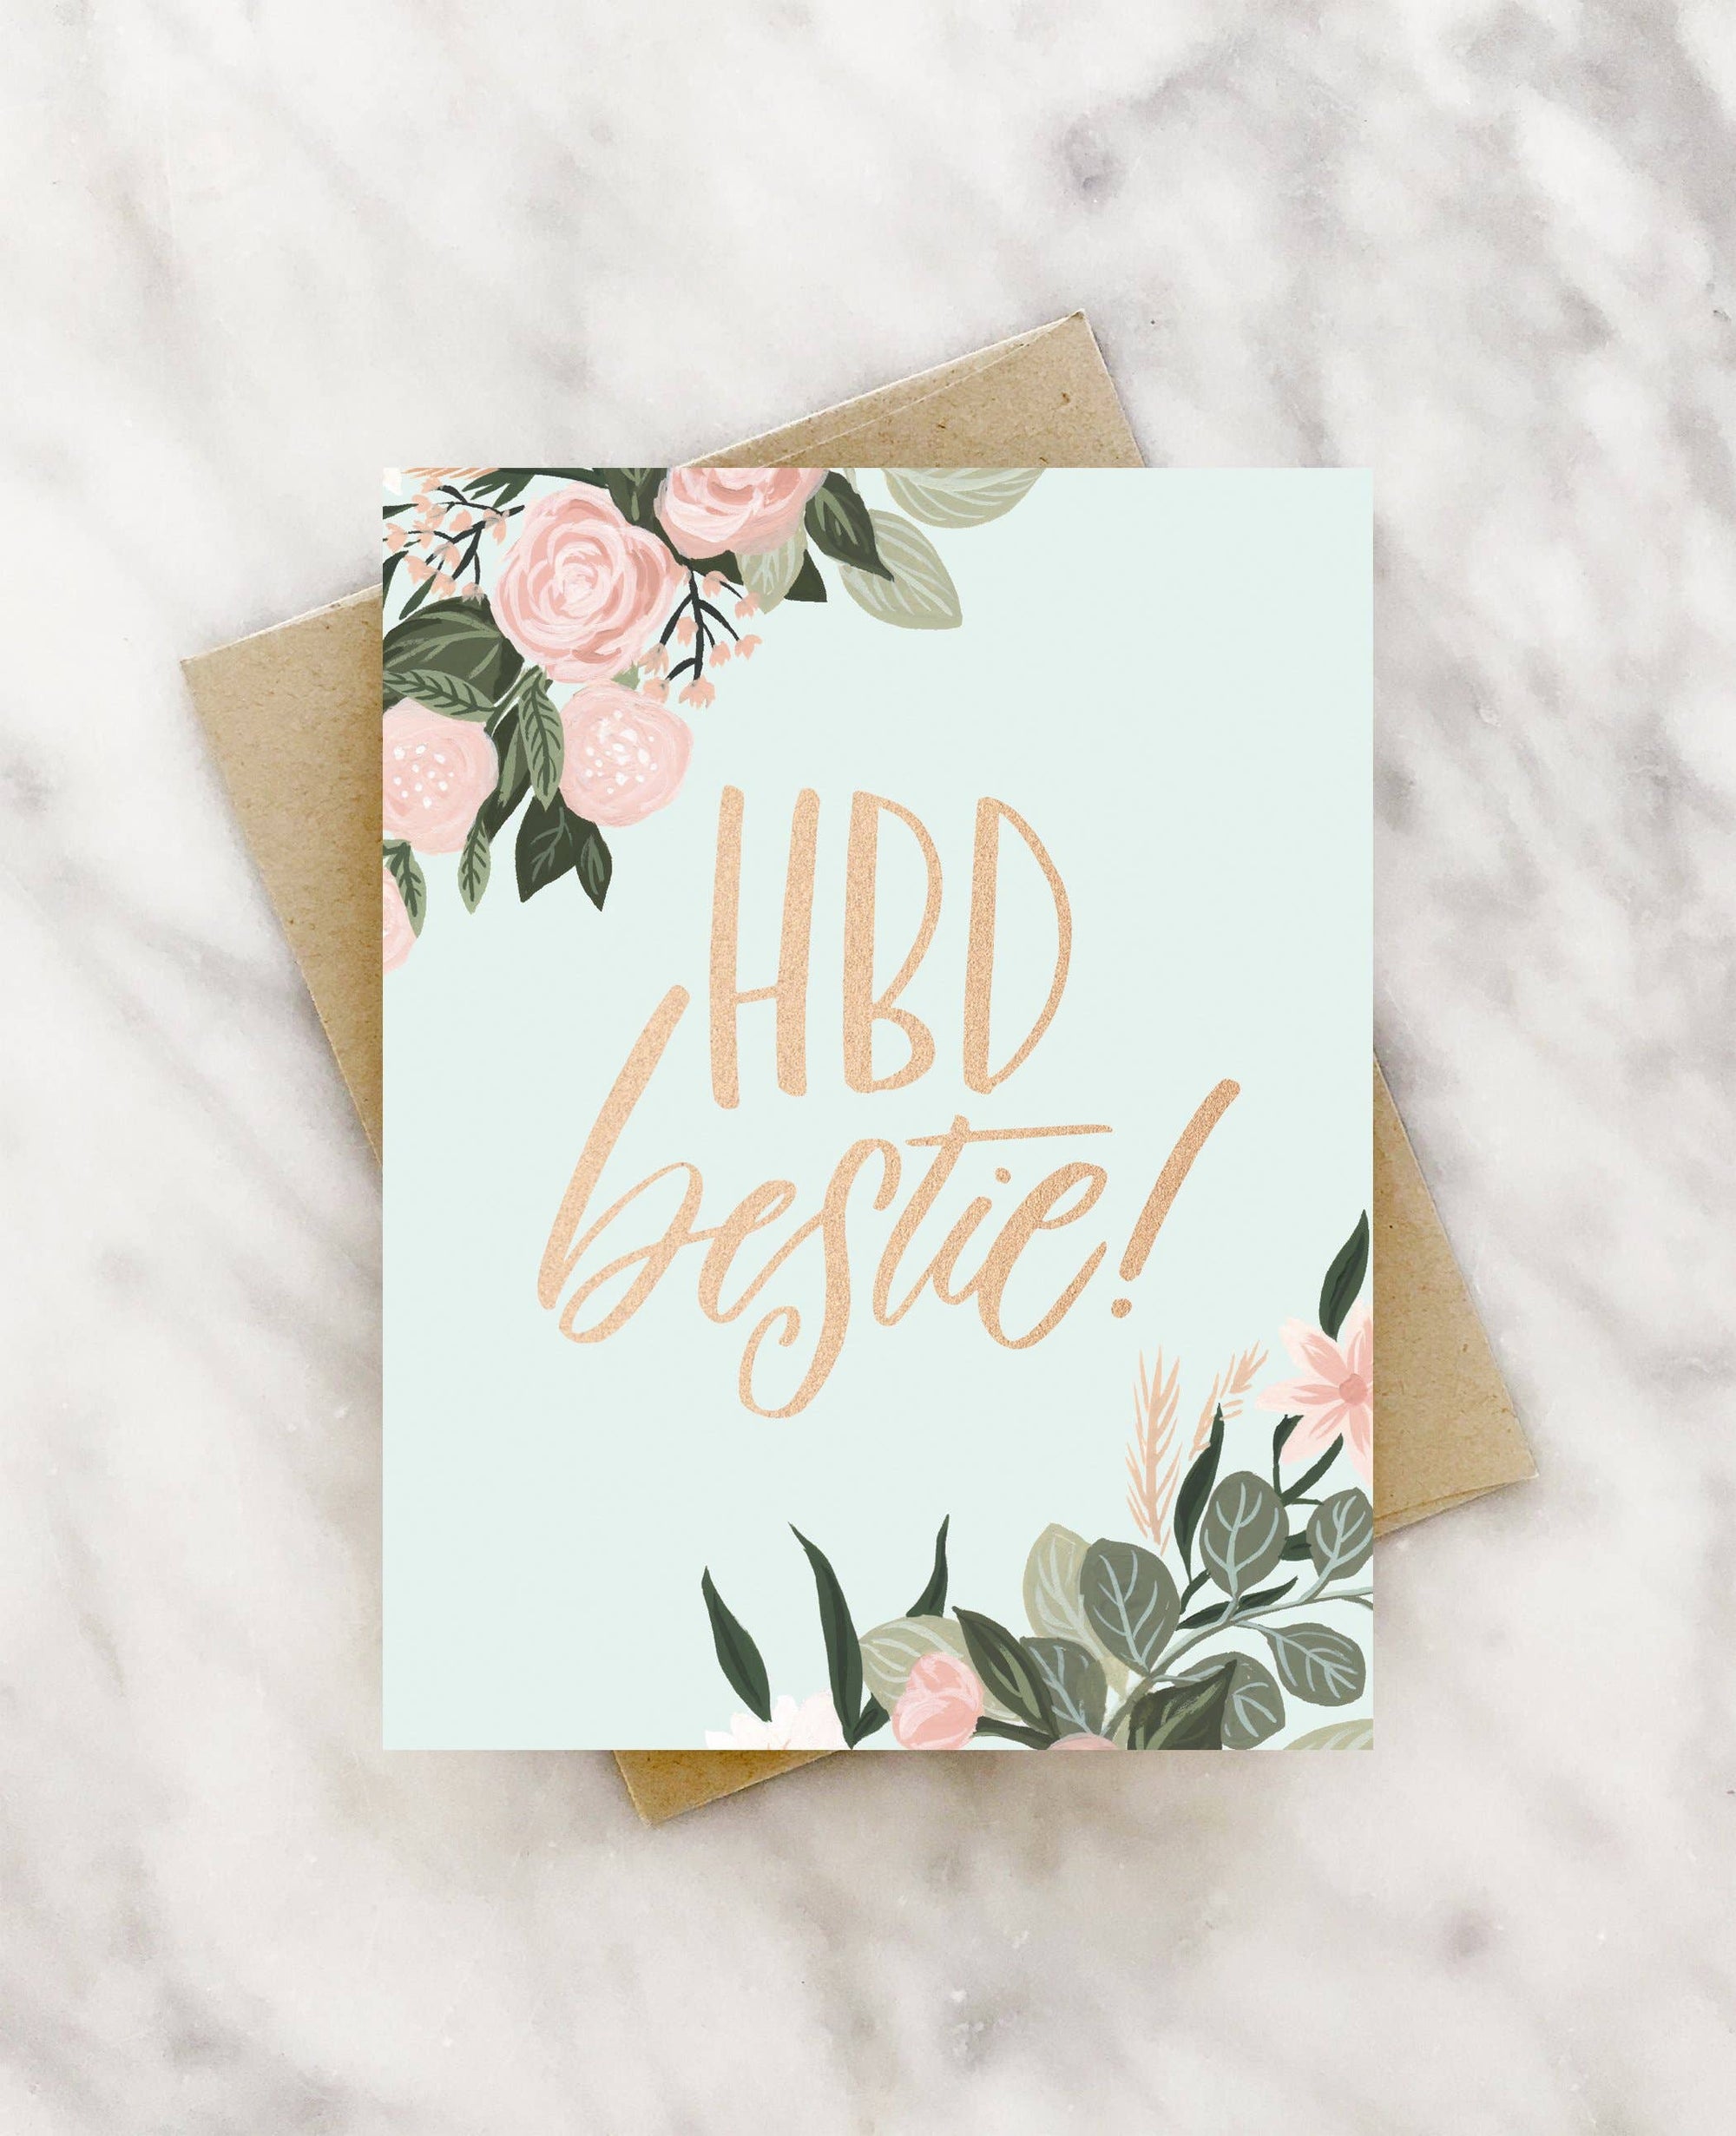 HBD bestie! birthday card: Single card